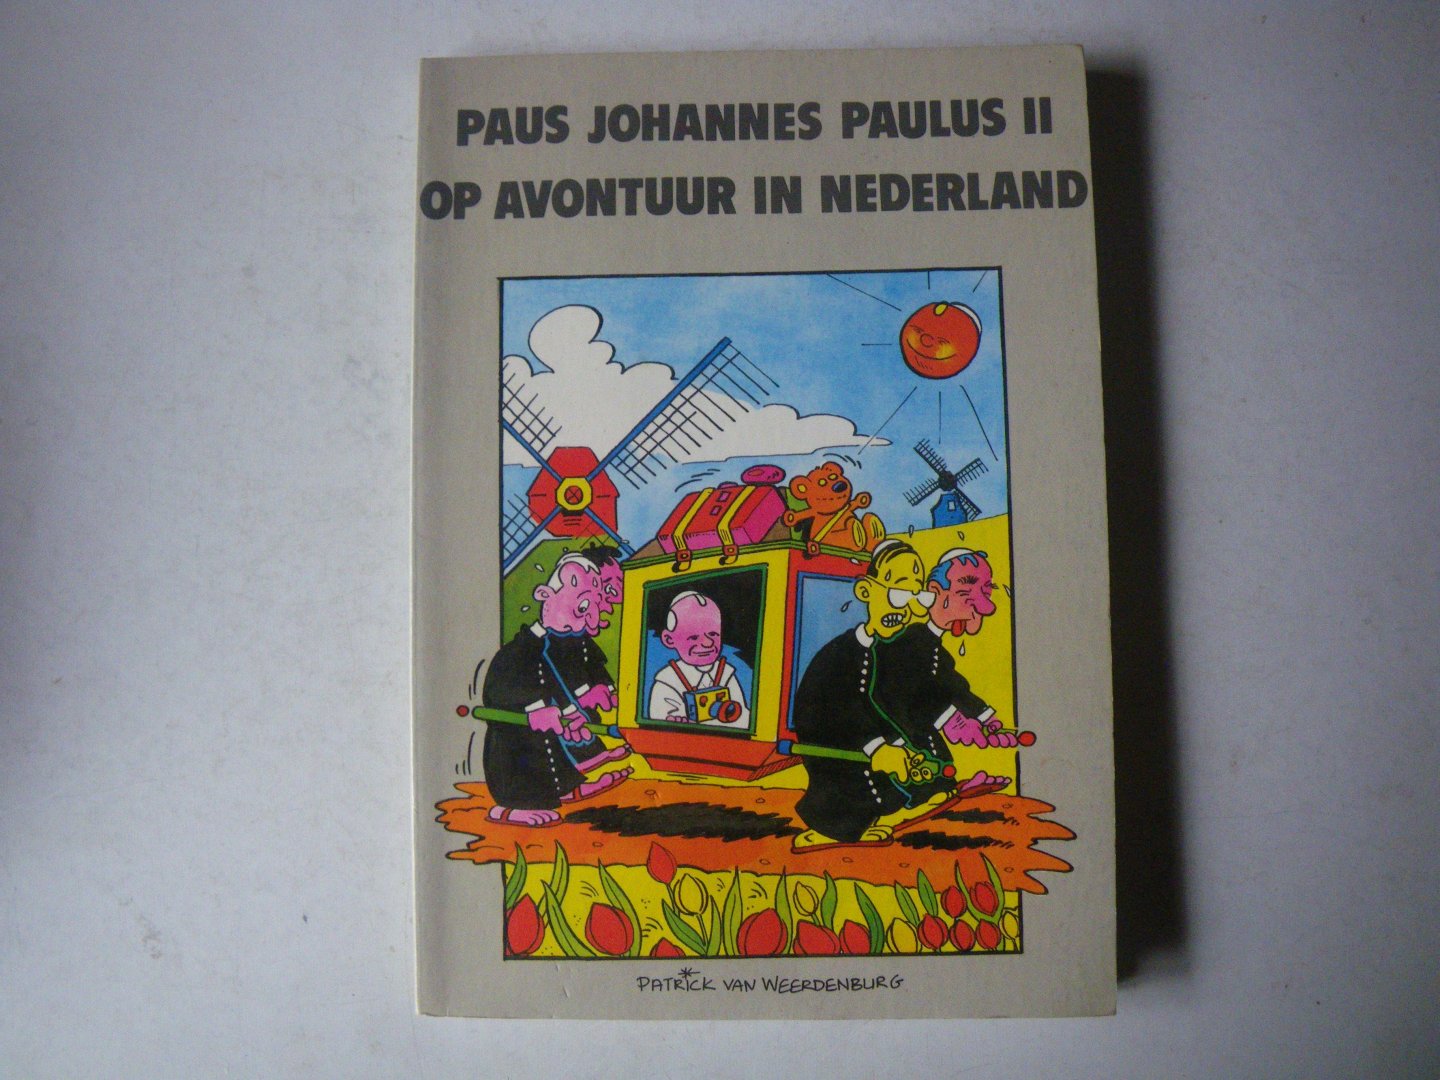 Patrick van Weerdenburg - Paus Johannes Paulus II op avontuur in Nederland